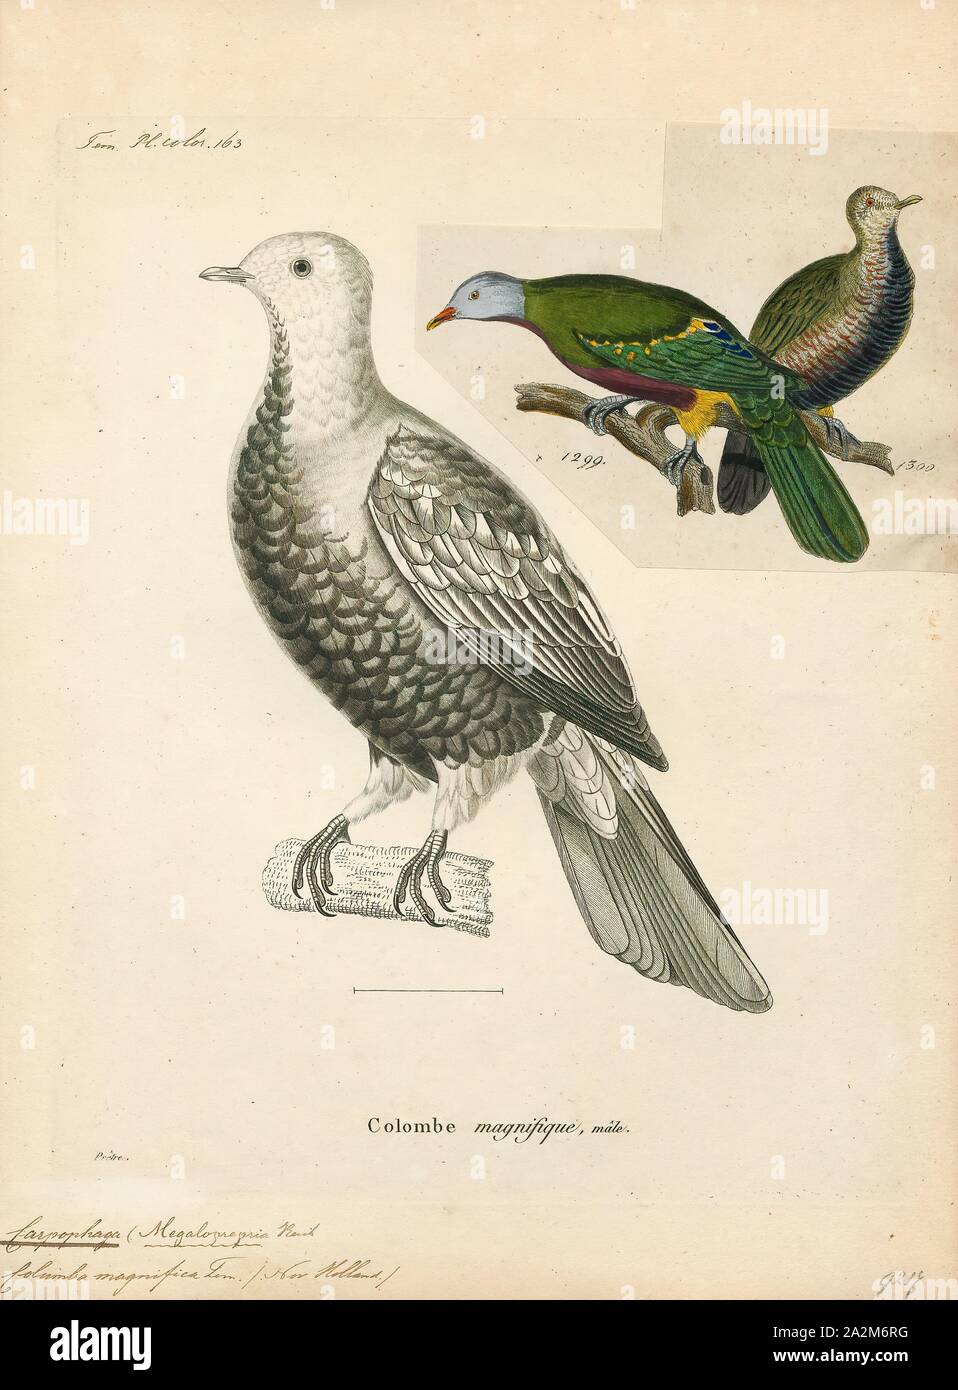 Carpophaga magnifica, Print, 1700-1880 Stock Photo